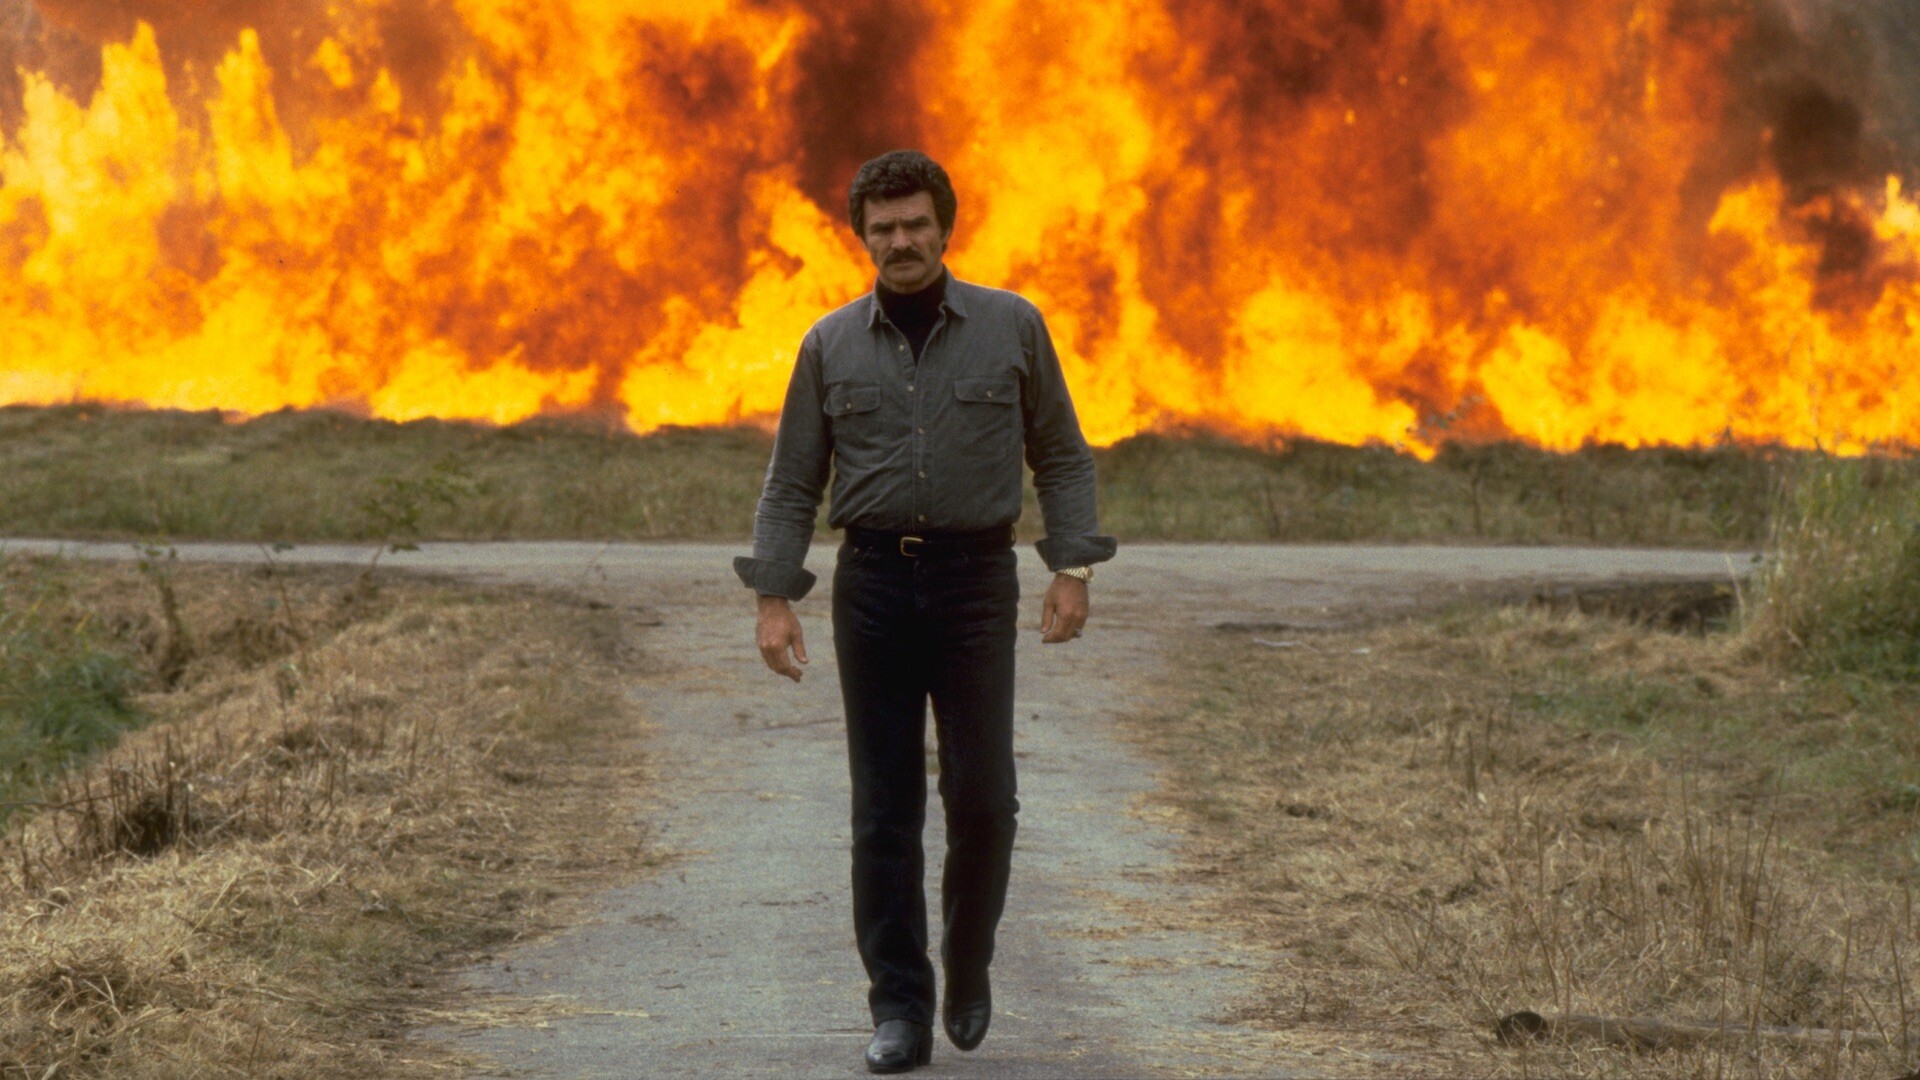 Burt Reynolds: Malone, 1987, An  American action thriller film, Director Harley Cokeliss, Richard Malone. 1920x1080 Full HD Background.